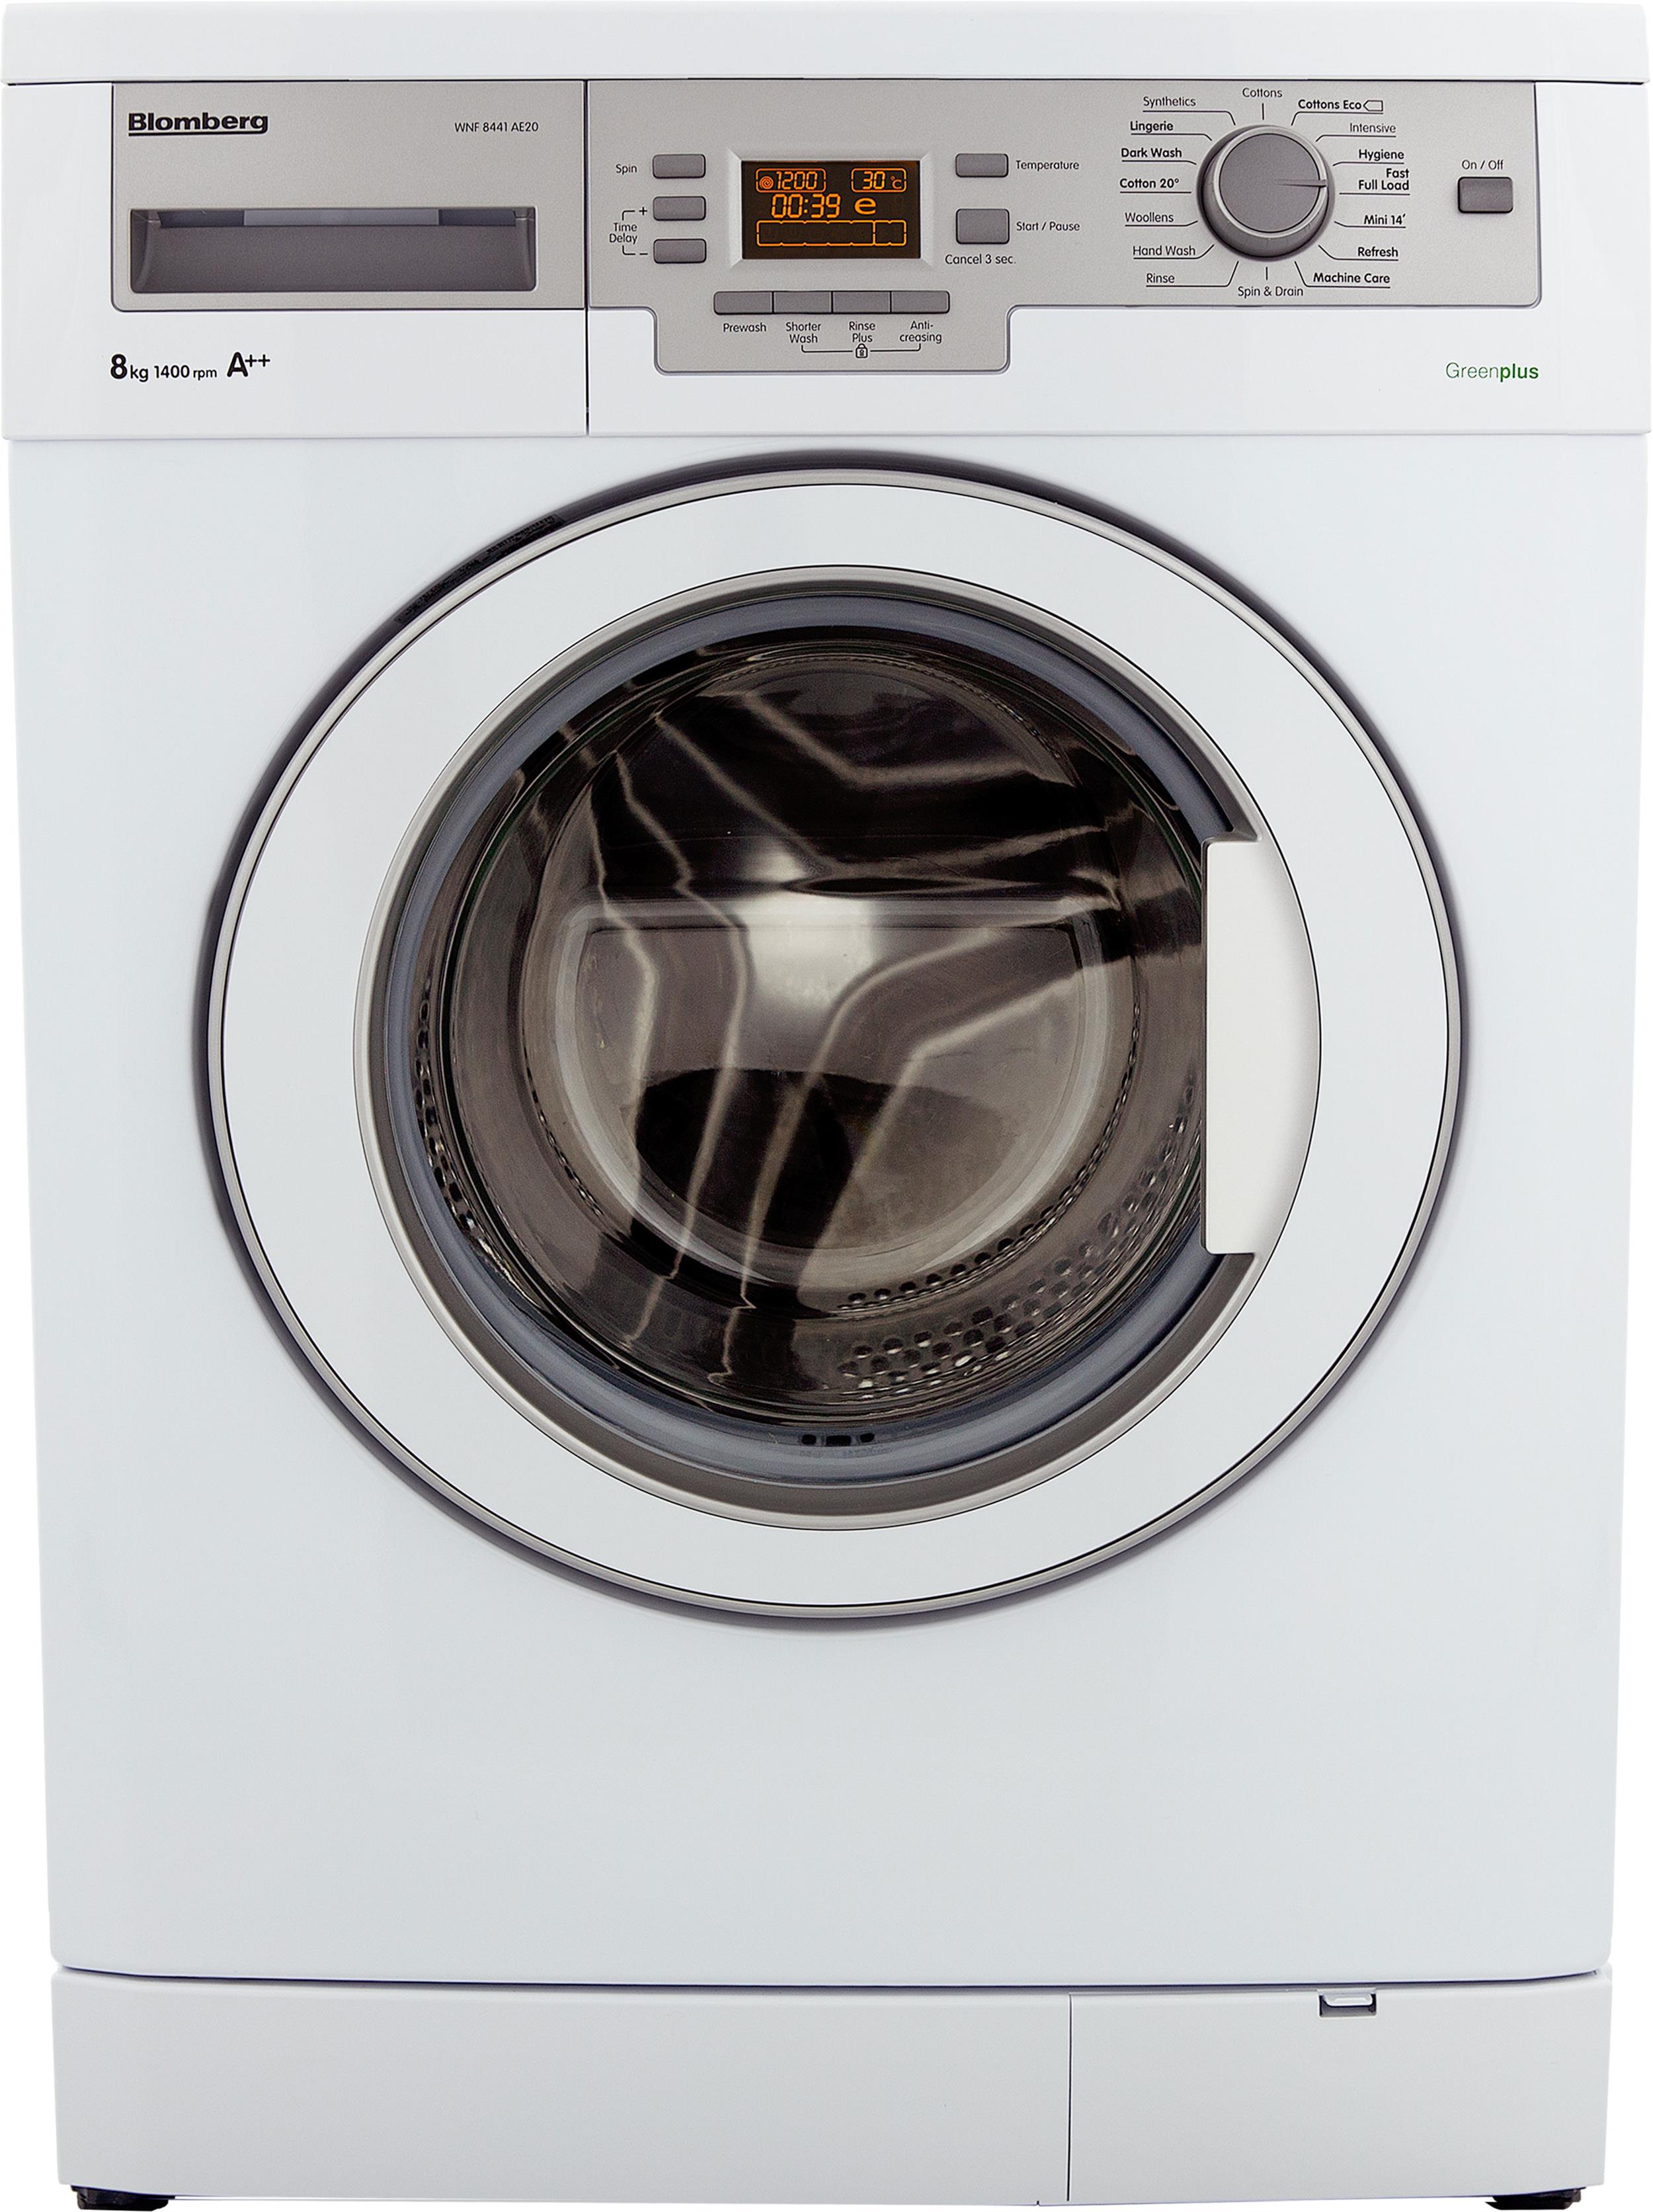 Pictures Of Washing Machines - markanthonystudios.net